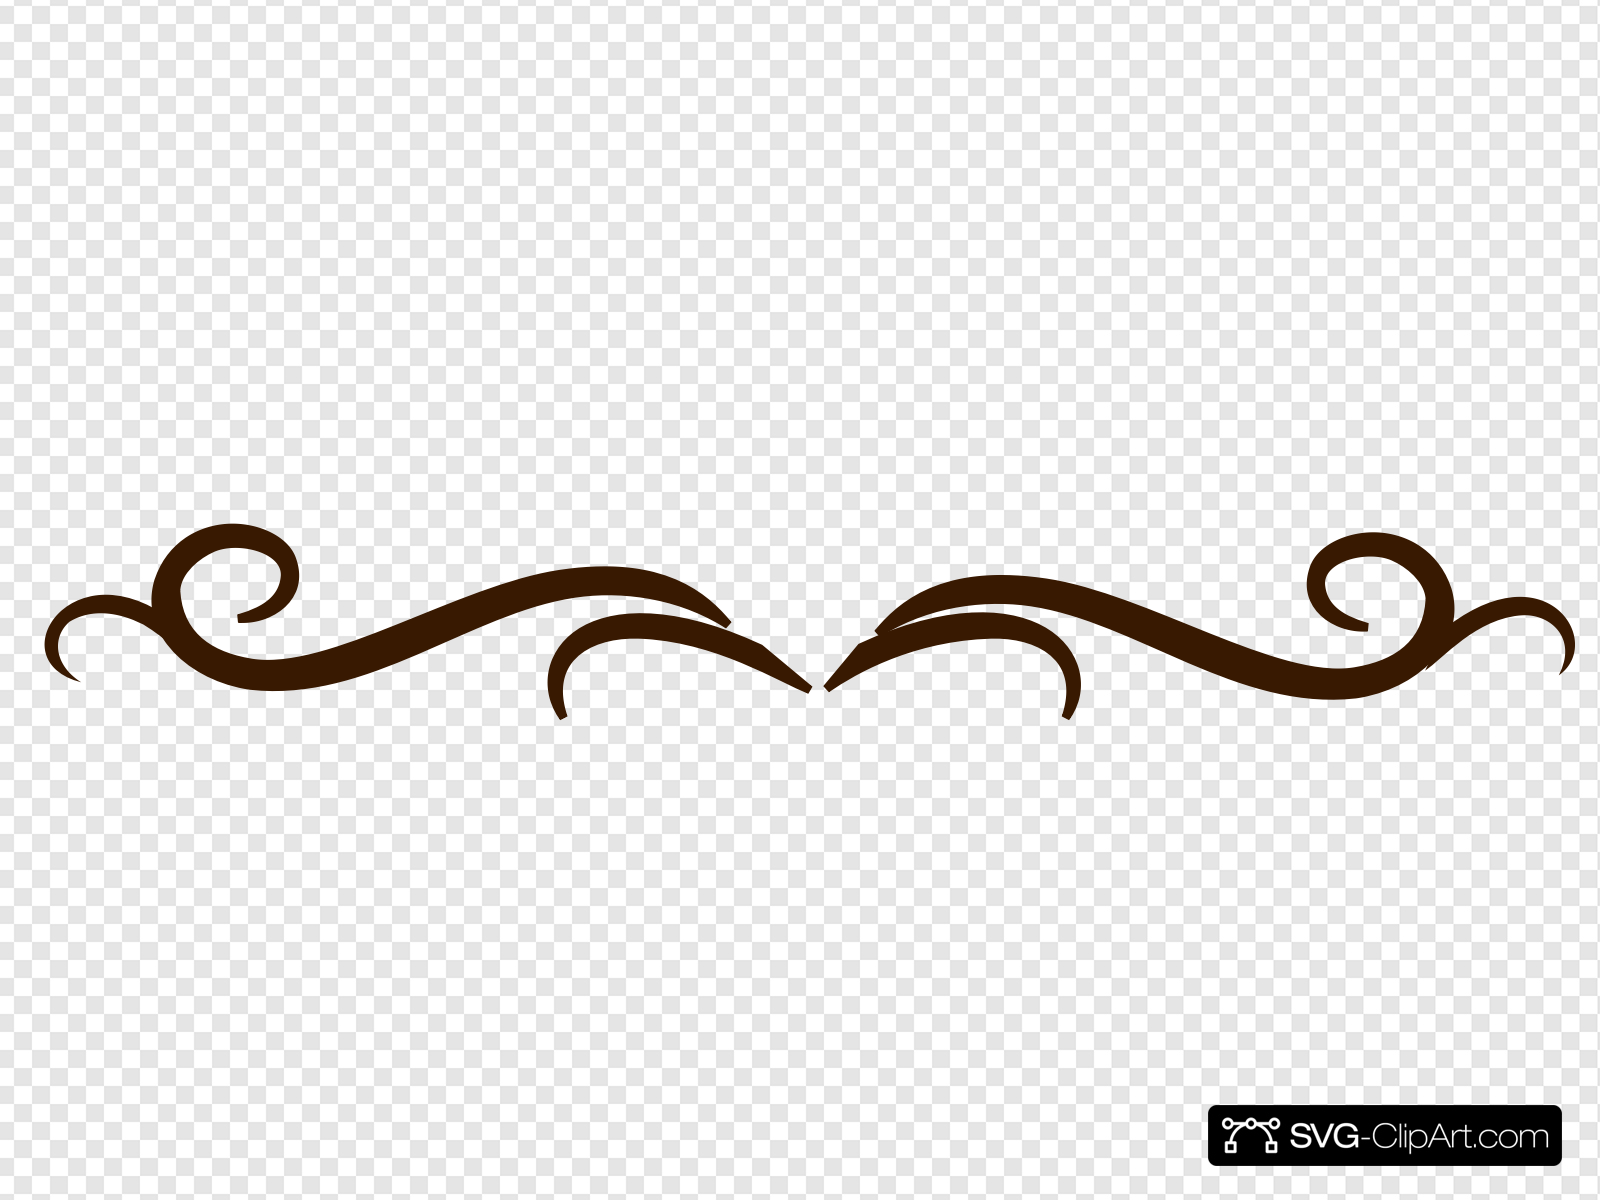 Dark Brown Flourish Clip art, Icon and SVG